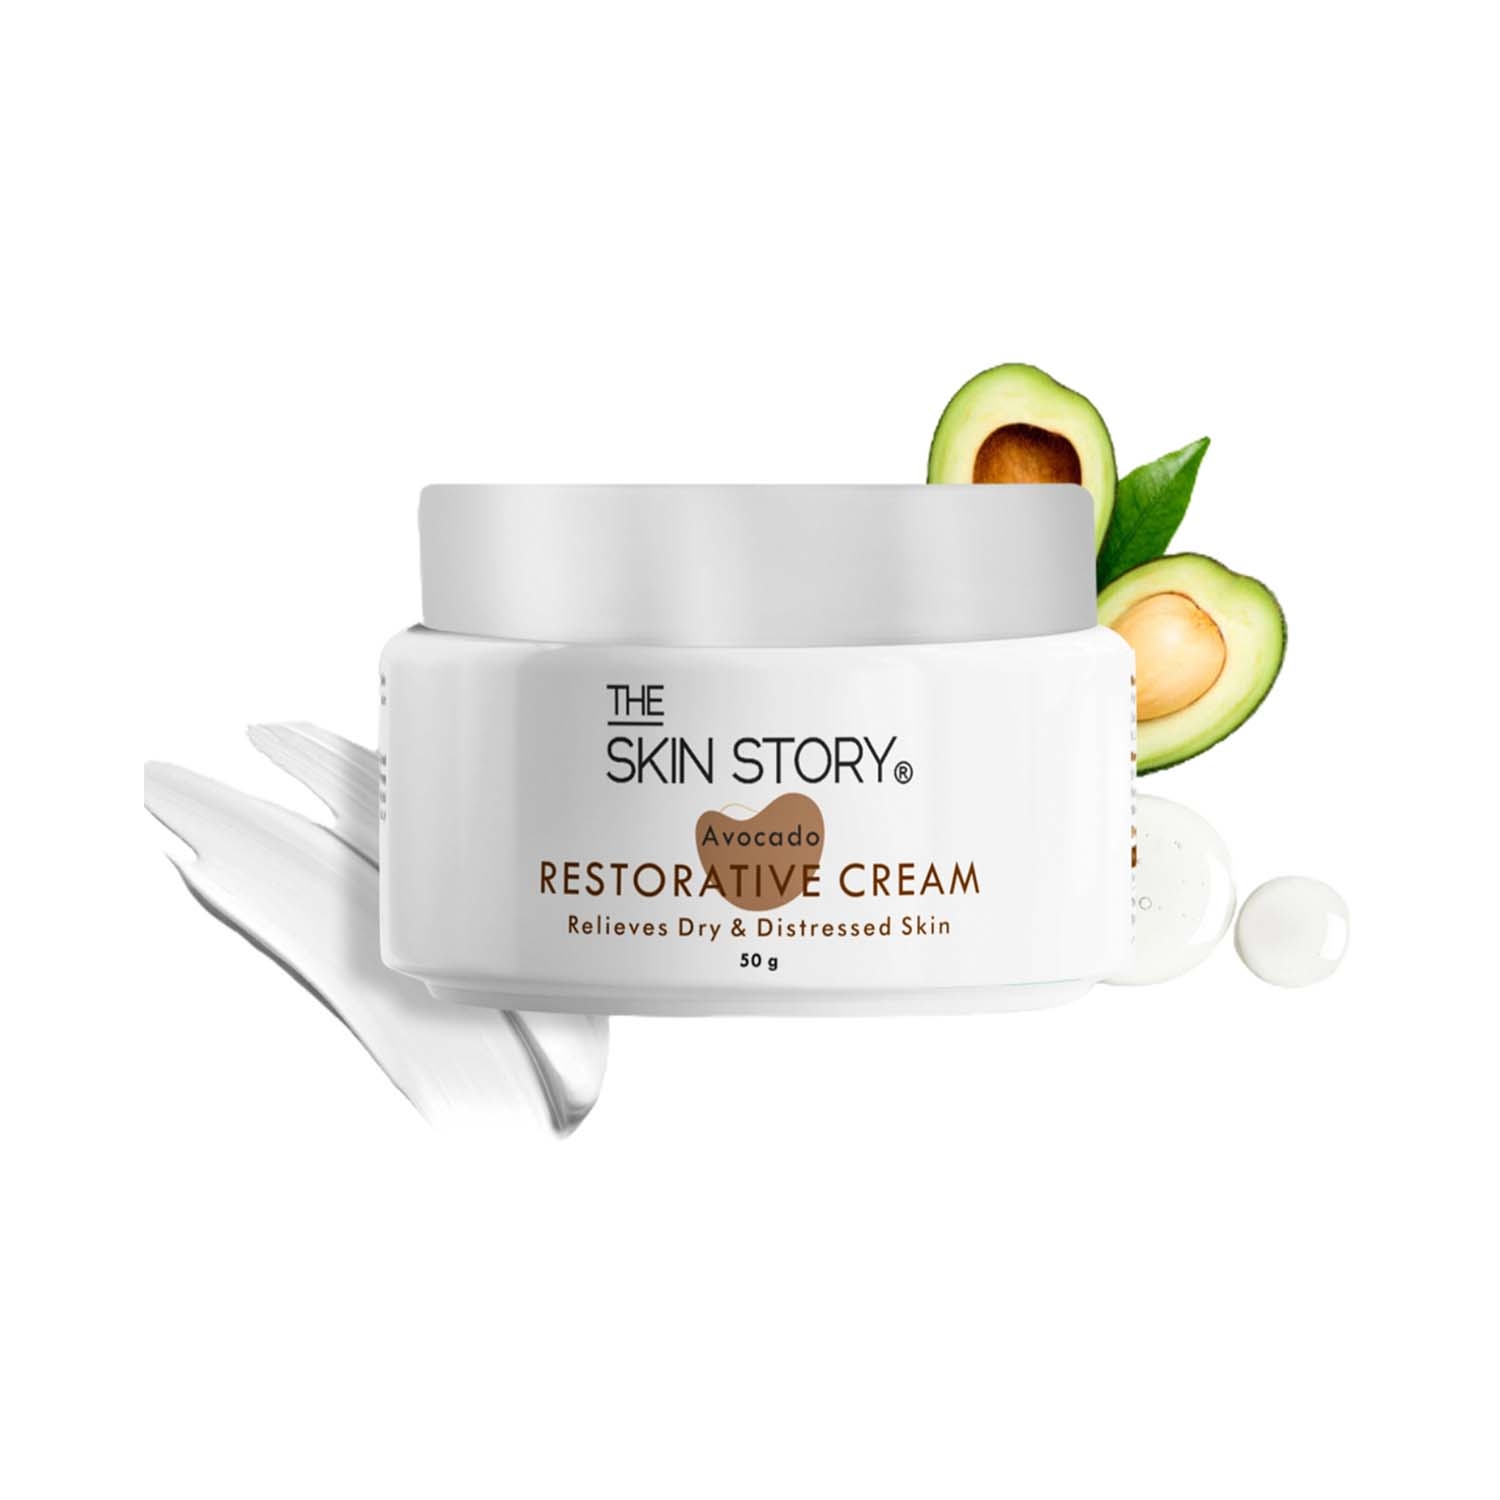 The Skin Story | The Skin Story Avocado Restorative Cream (50g)